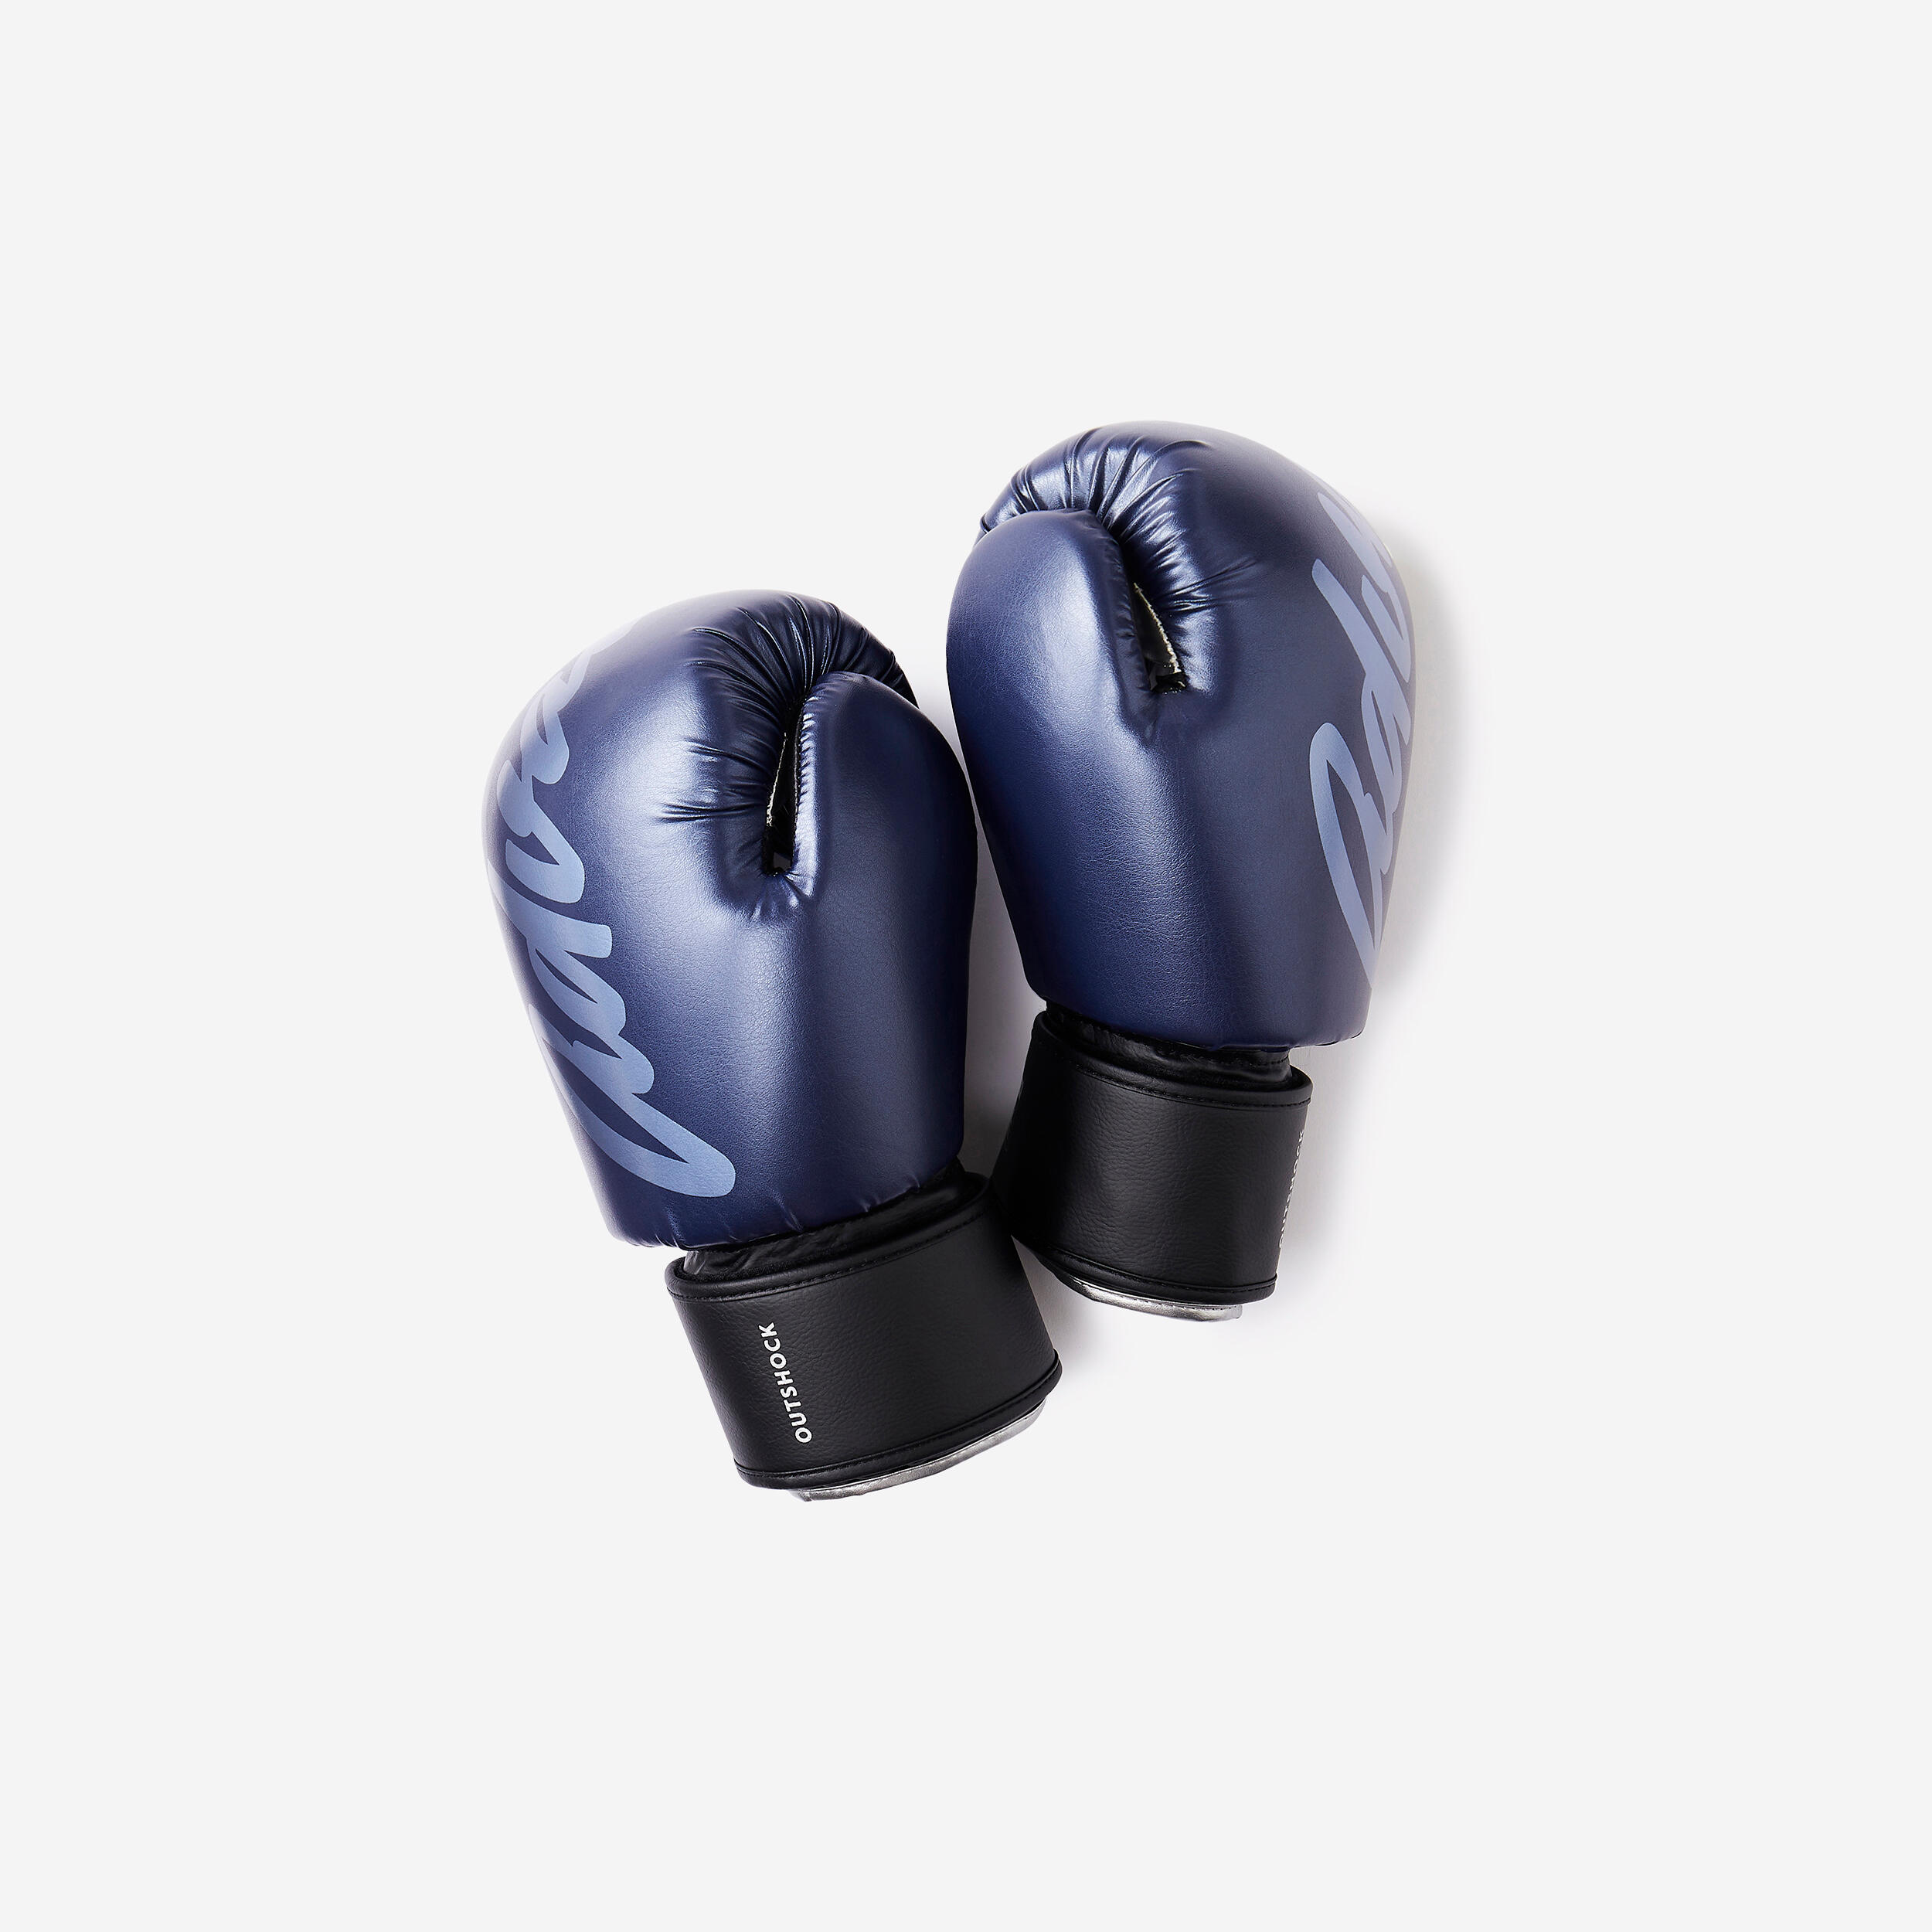 Kickboxing/Muay Thai Gloves - Blue 2/6